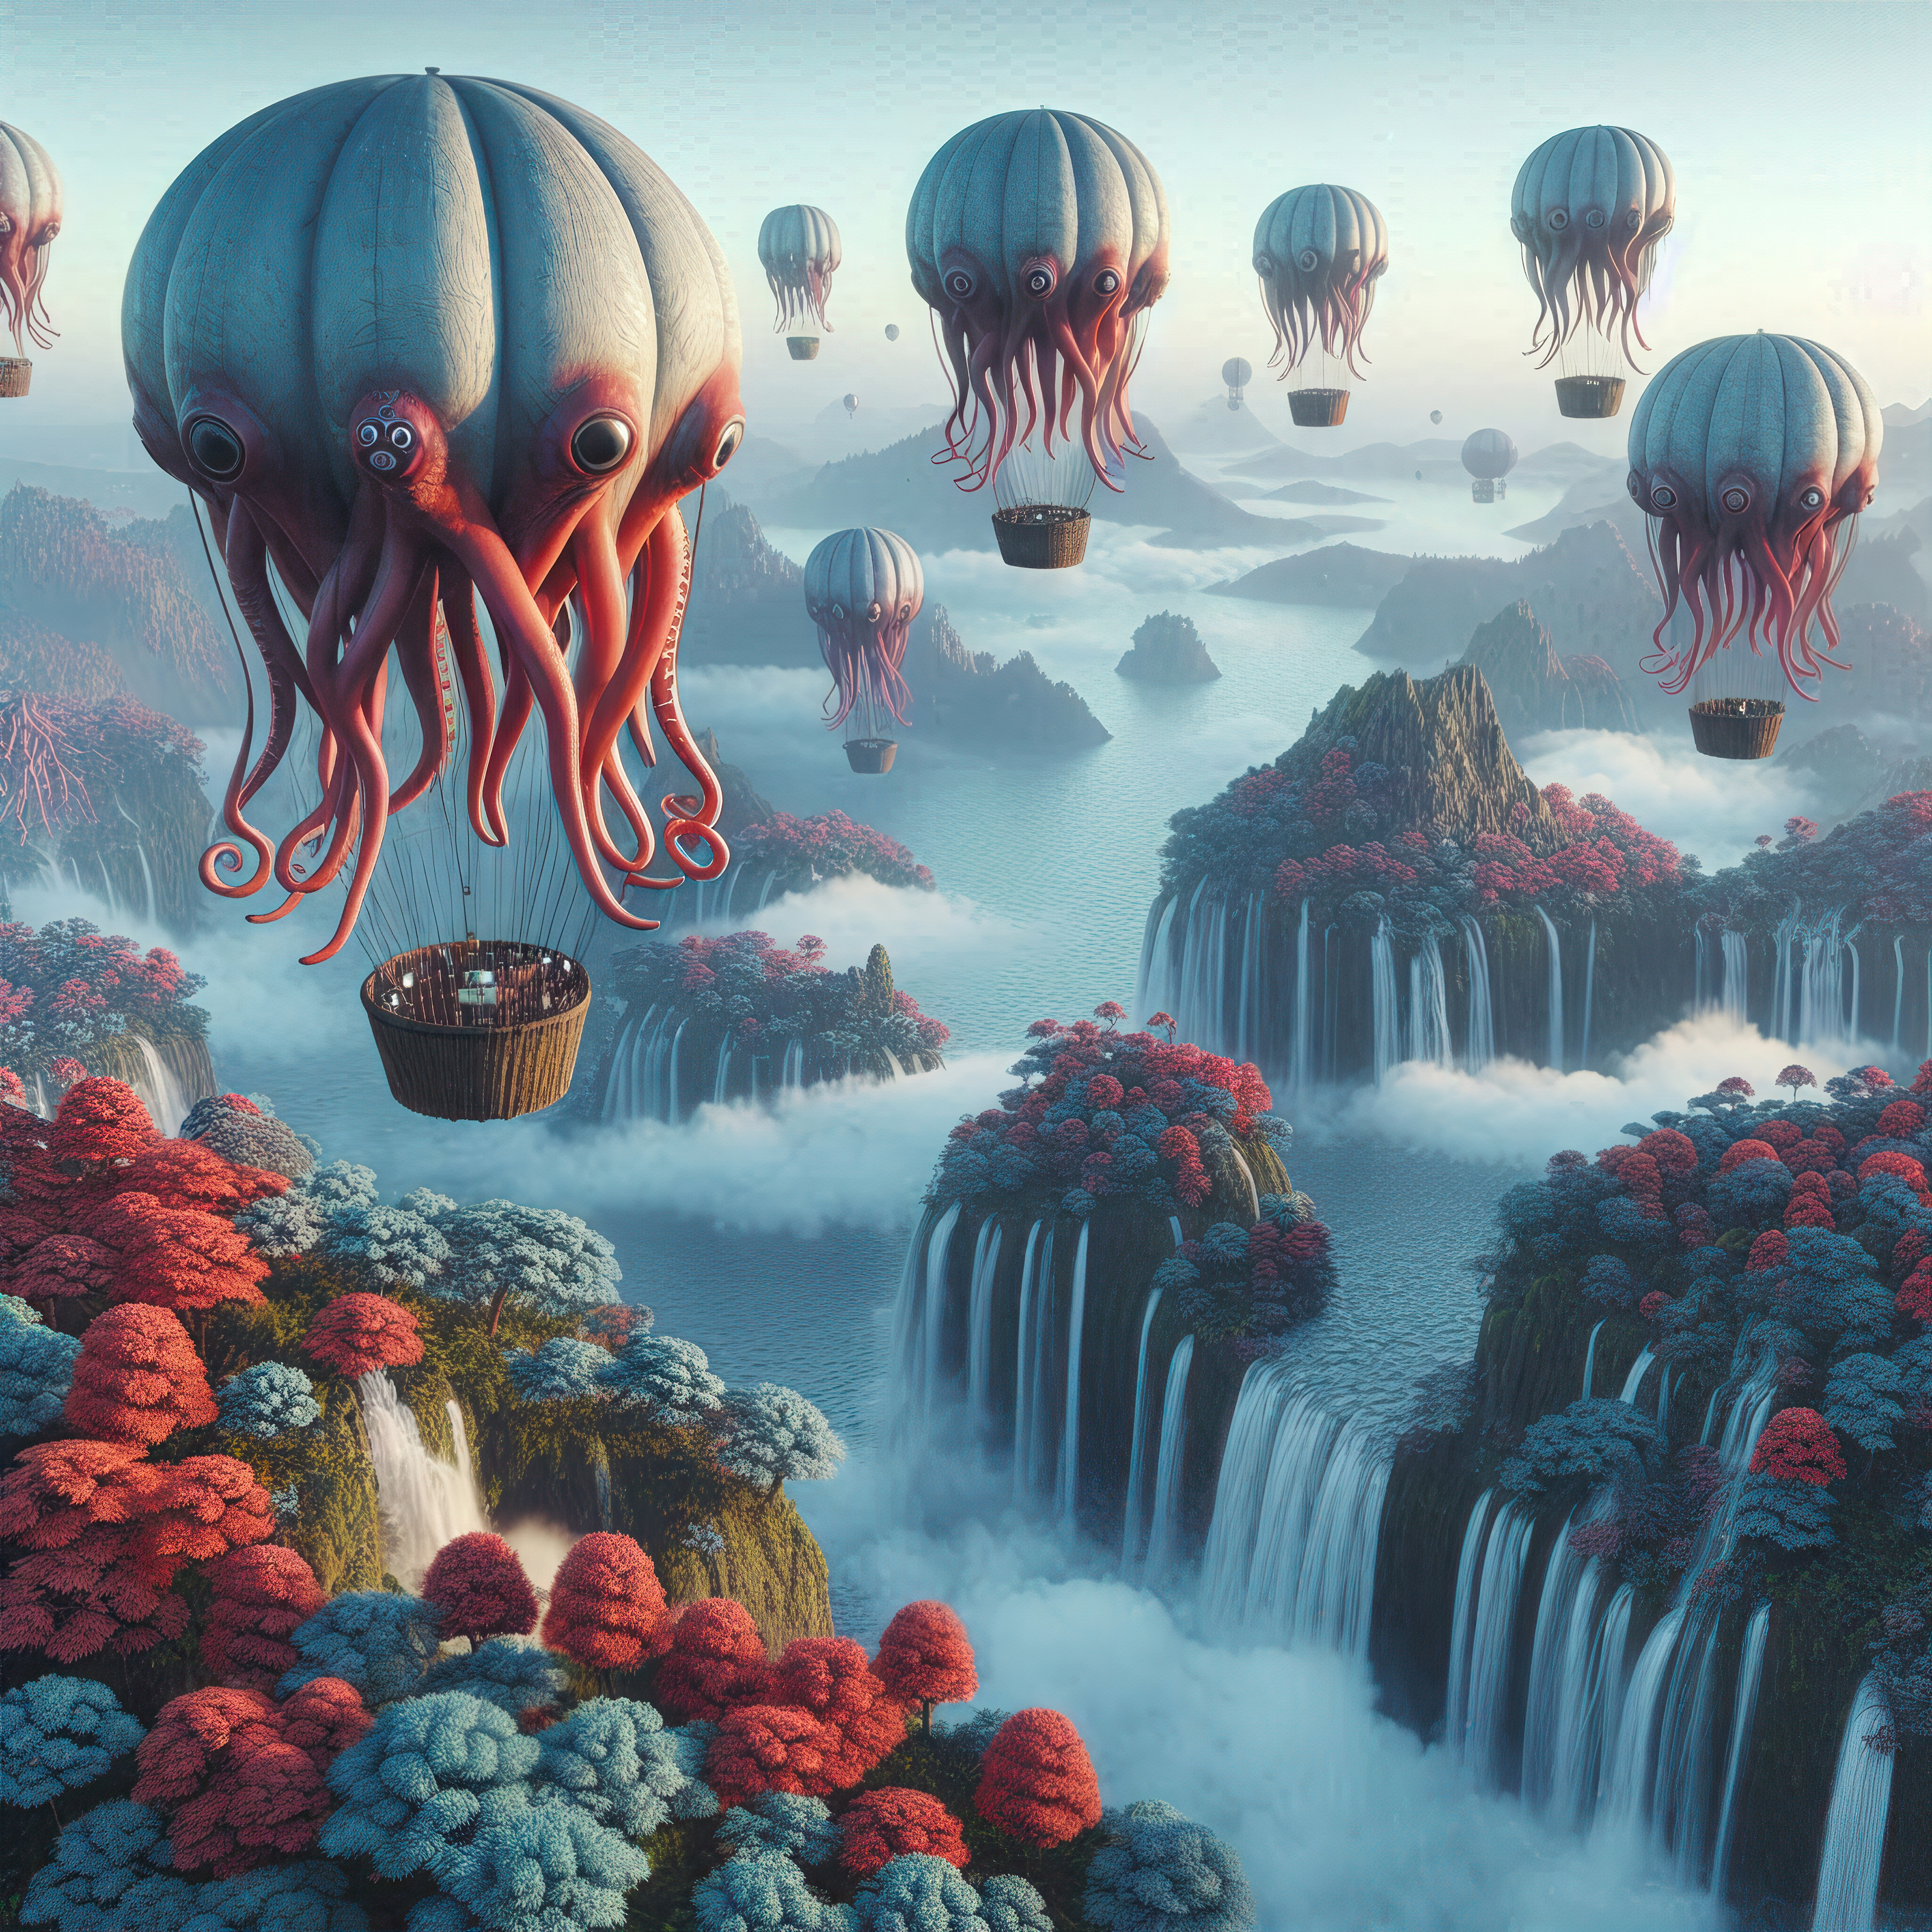 General 3200x3200 AI art fantasy art creature balloon octopus forest waterfall